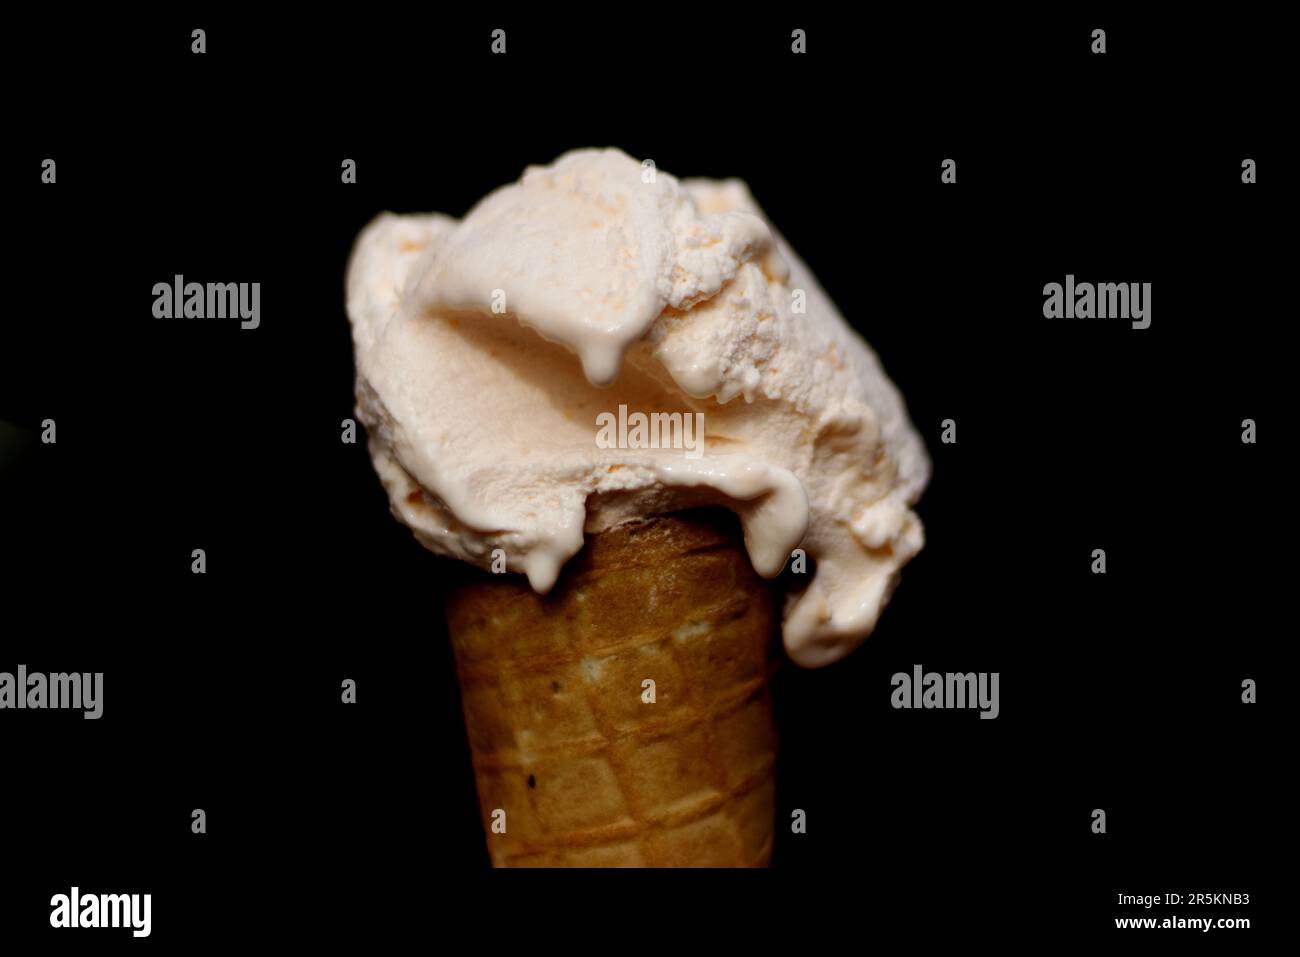 Orange flavored ice cream in a waffle cone on a black background - Italian gelato Stock Photo